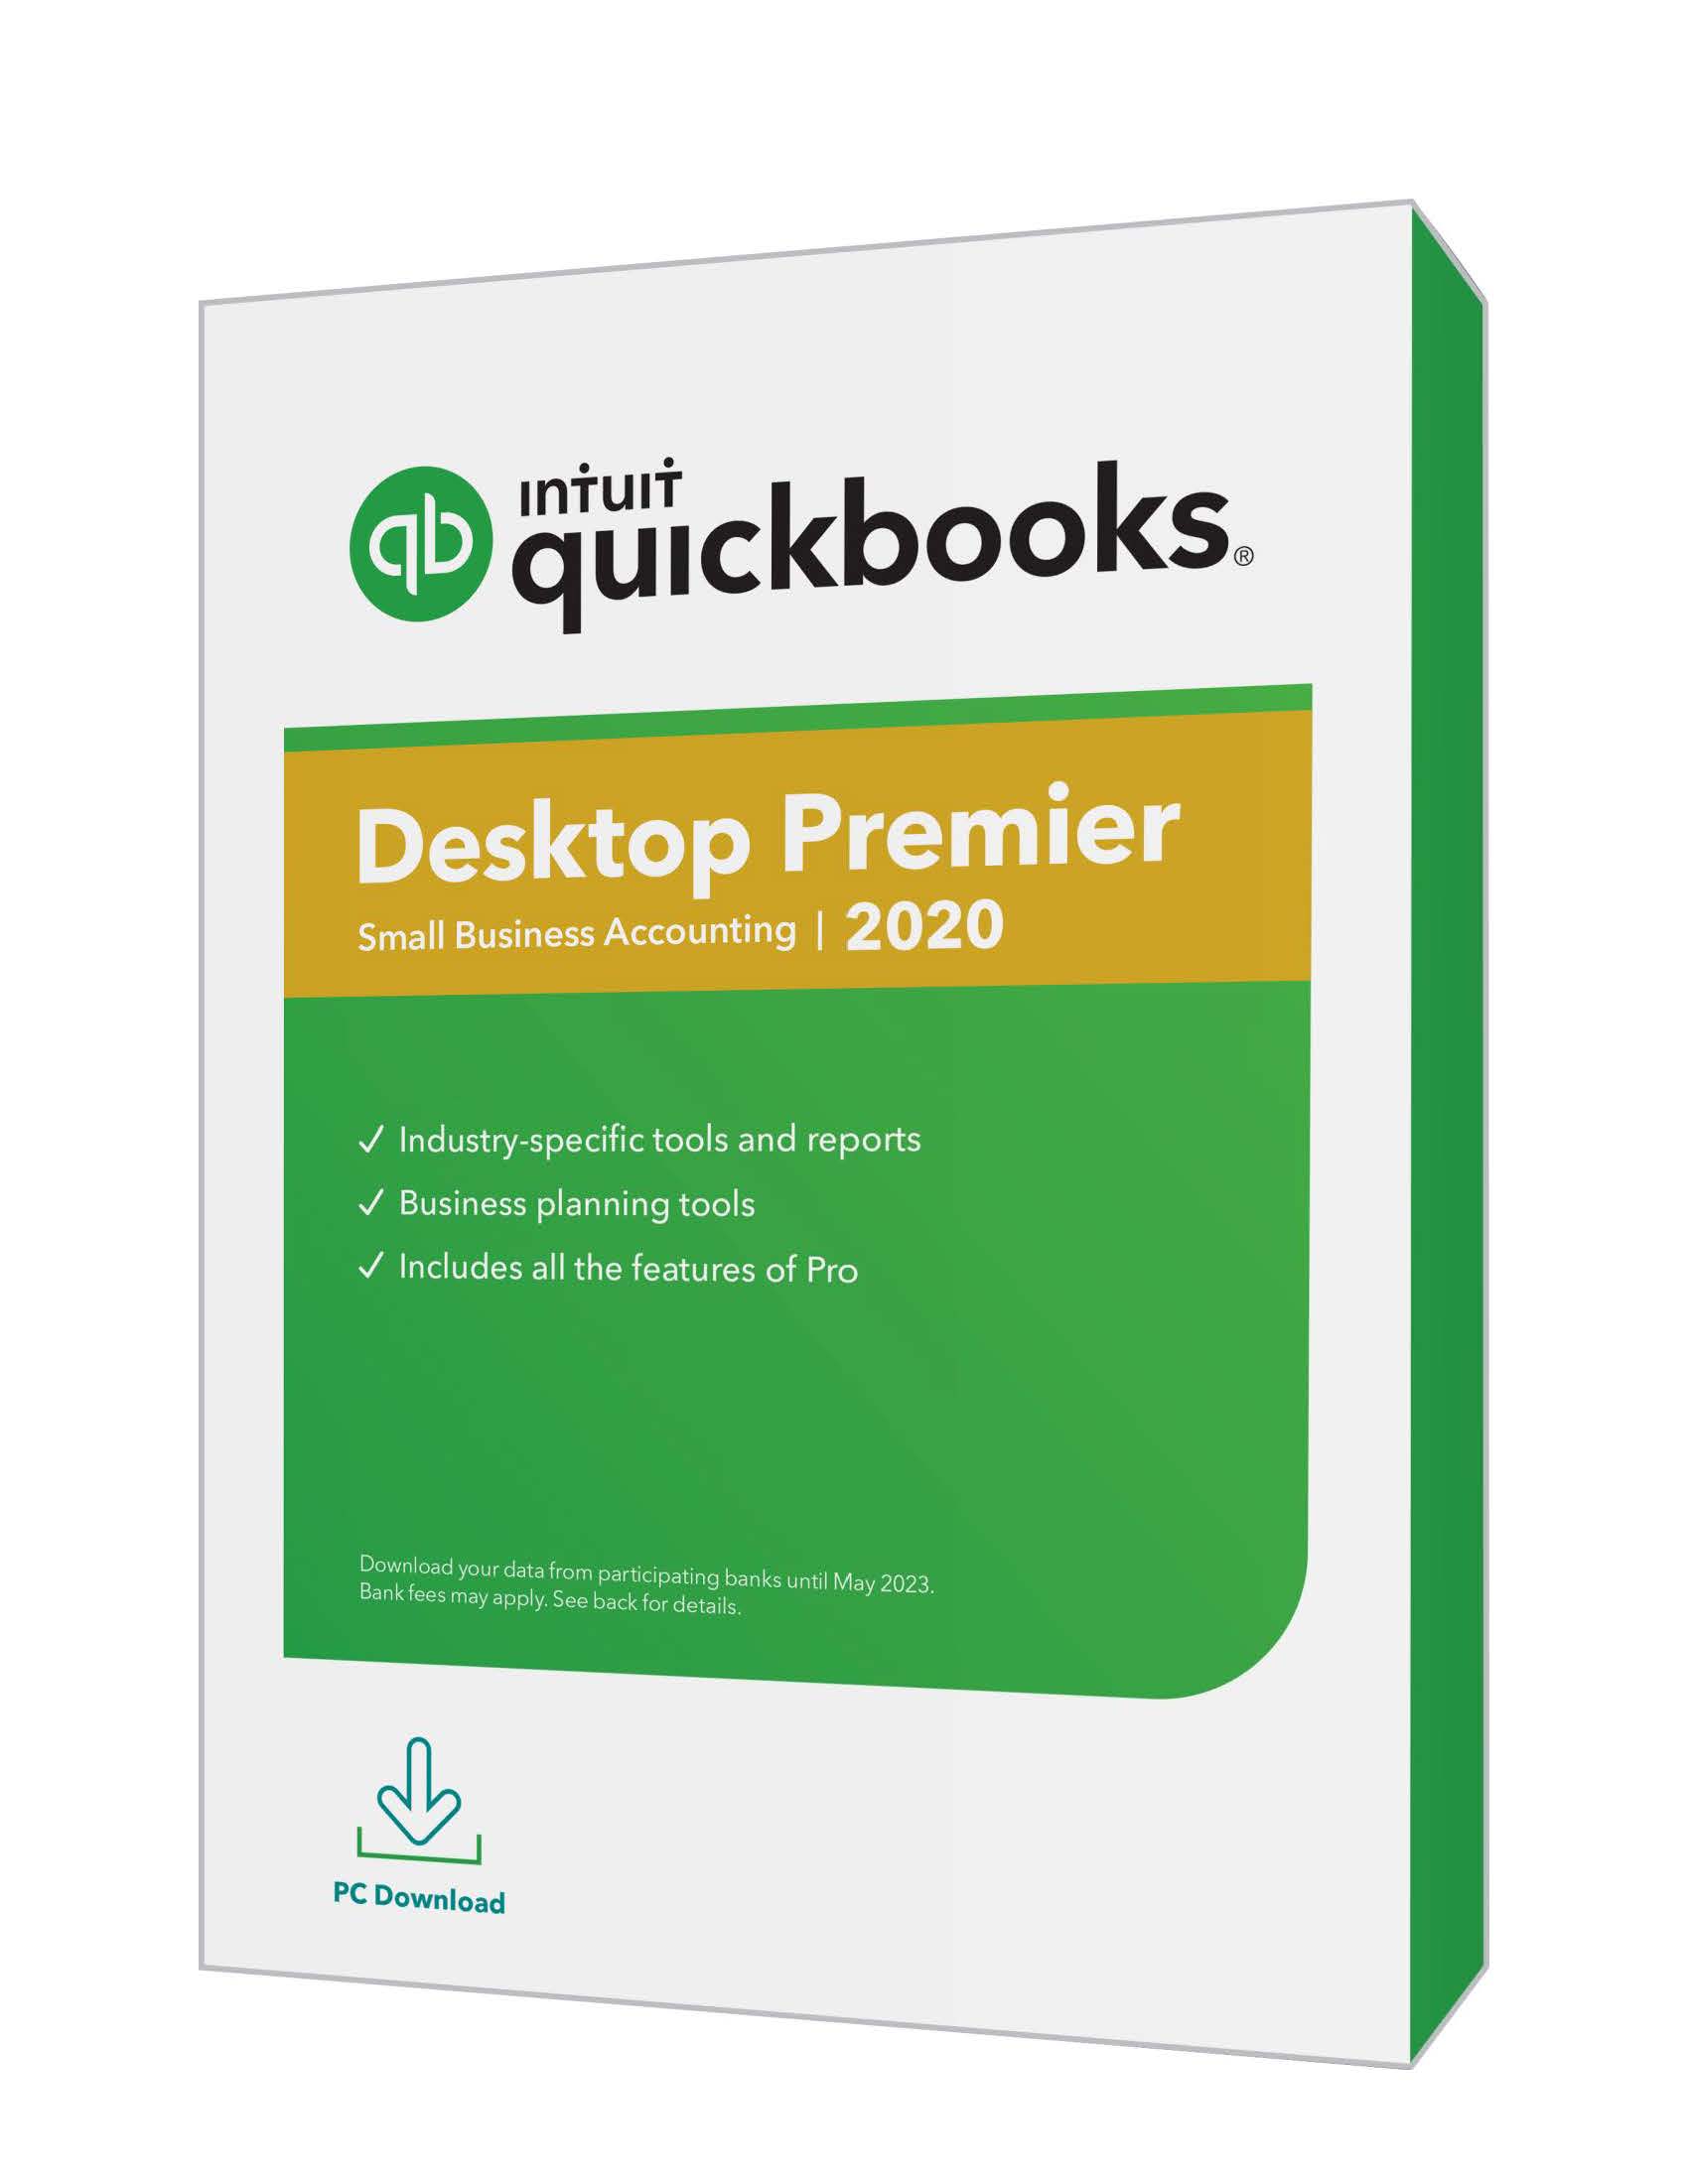 quickbooks desktop pro 2020 release date